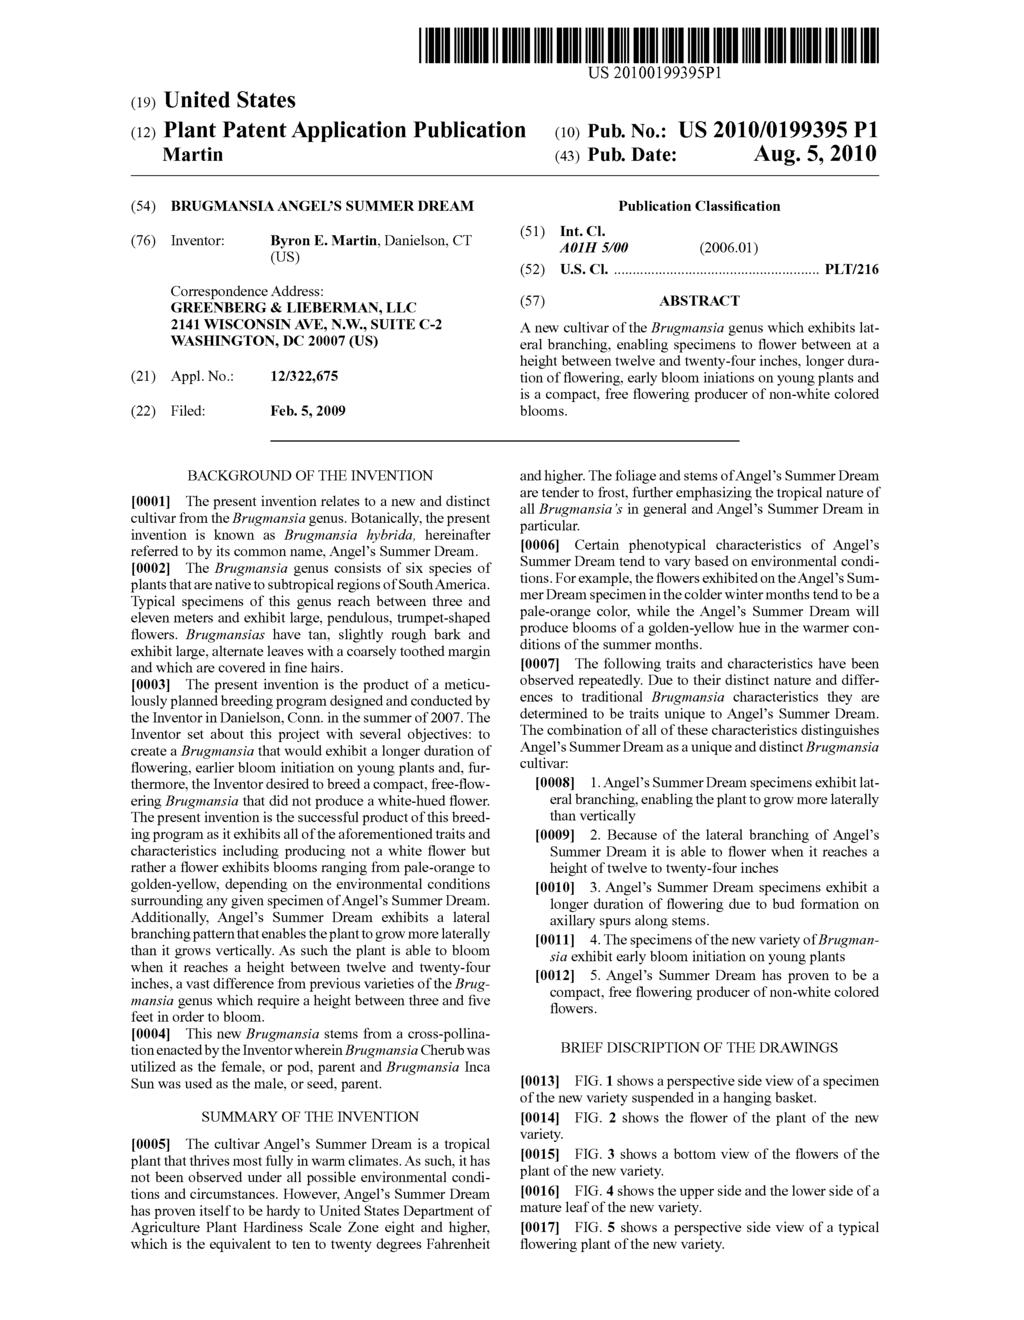 (19) United States (12) Plant Patent Application Publication Martin US 20100 199395P1 (10) Pub. No.: (43) Pub. Date: Aug. 5, 2010 (54) BRUGMANSIA ANGELS SUMMER DREAM (76) Inventor: Byron E.